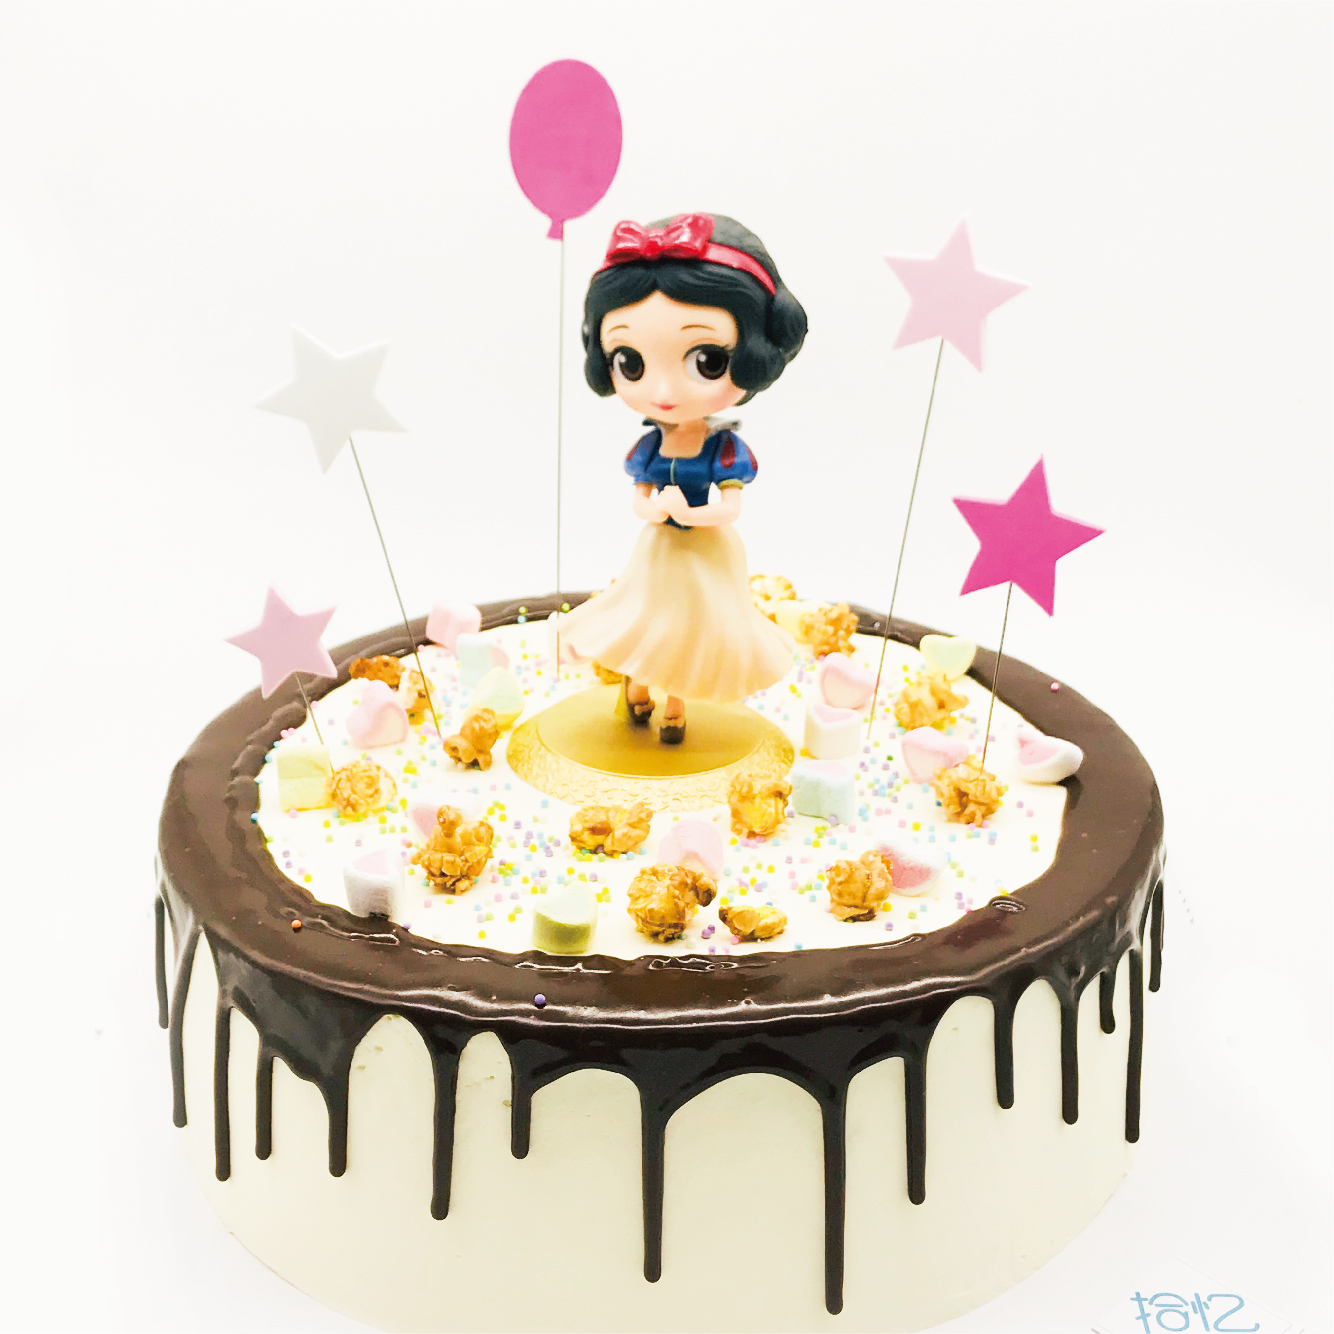 Helena's Kitchen: 白雪公主蛋糕 （Snow White Birthday Cake）